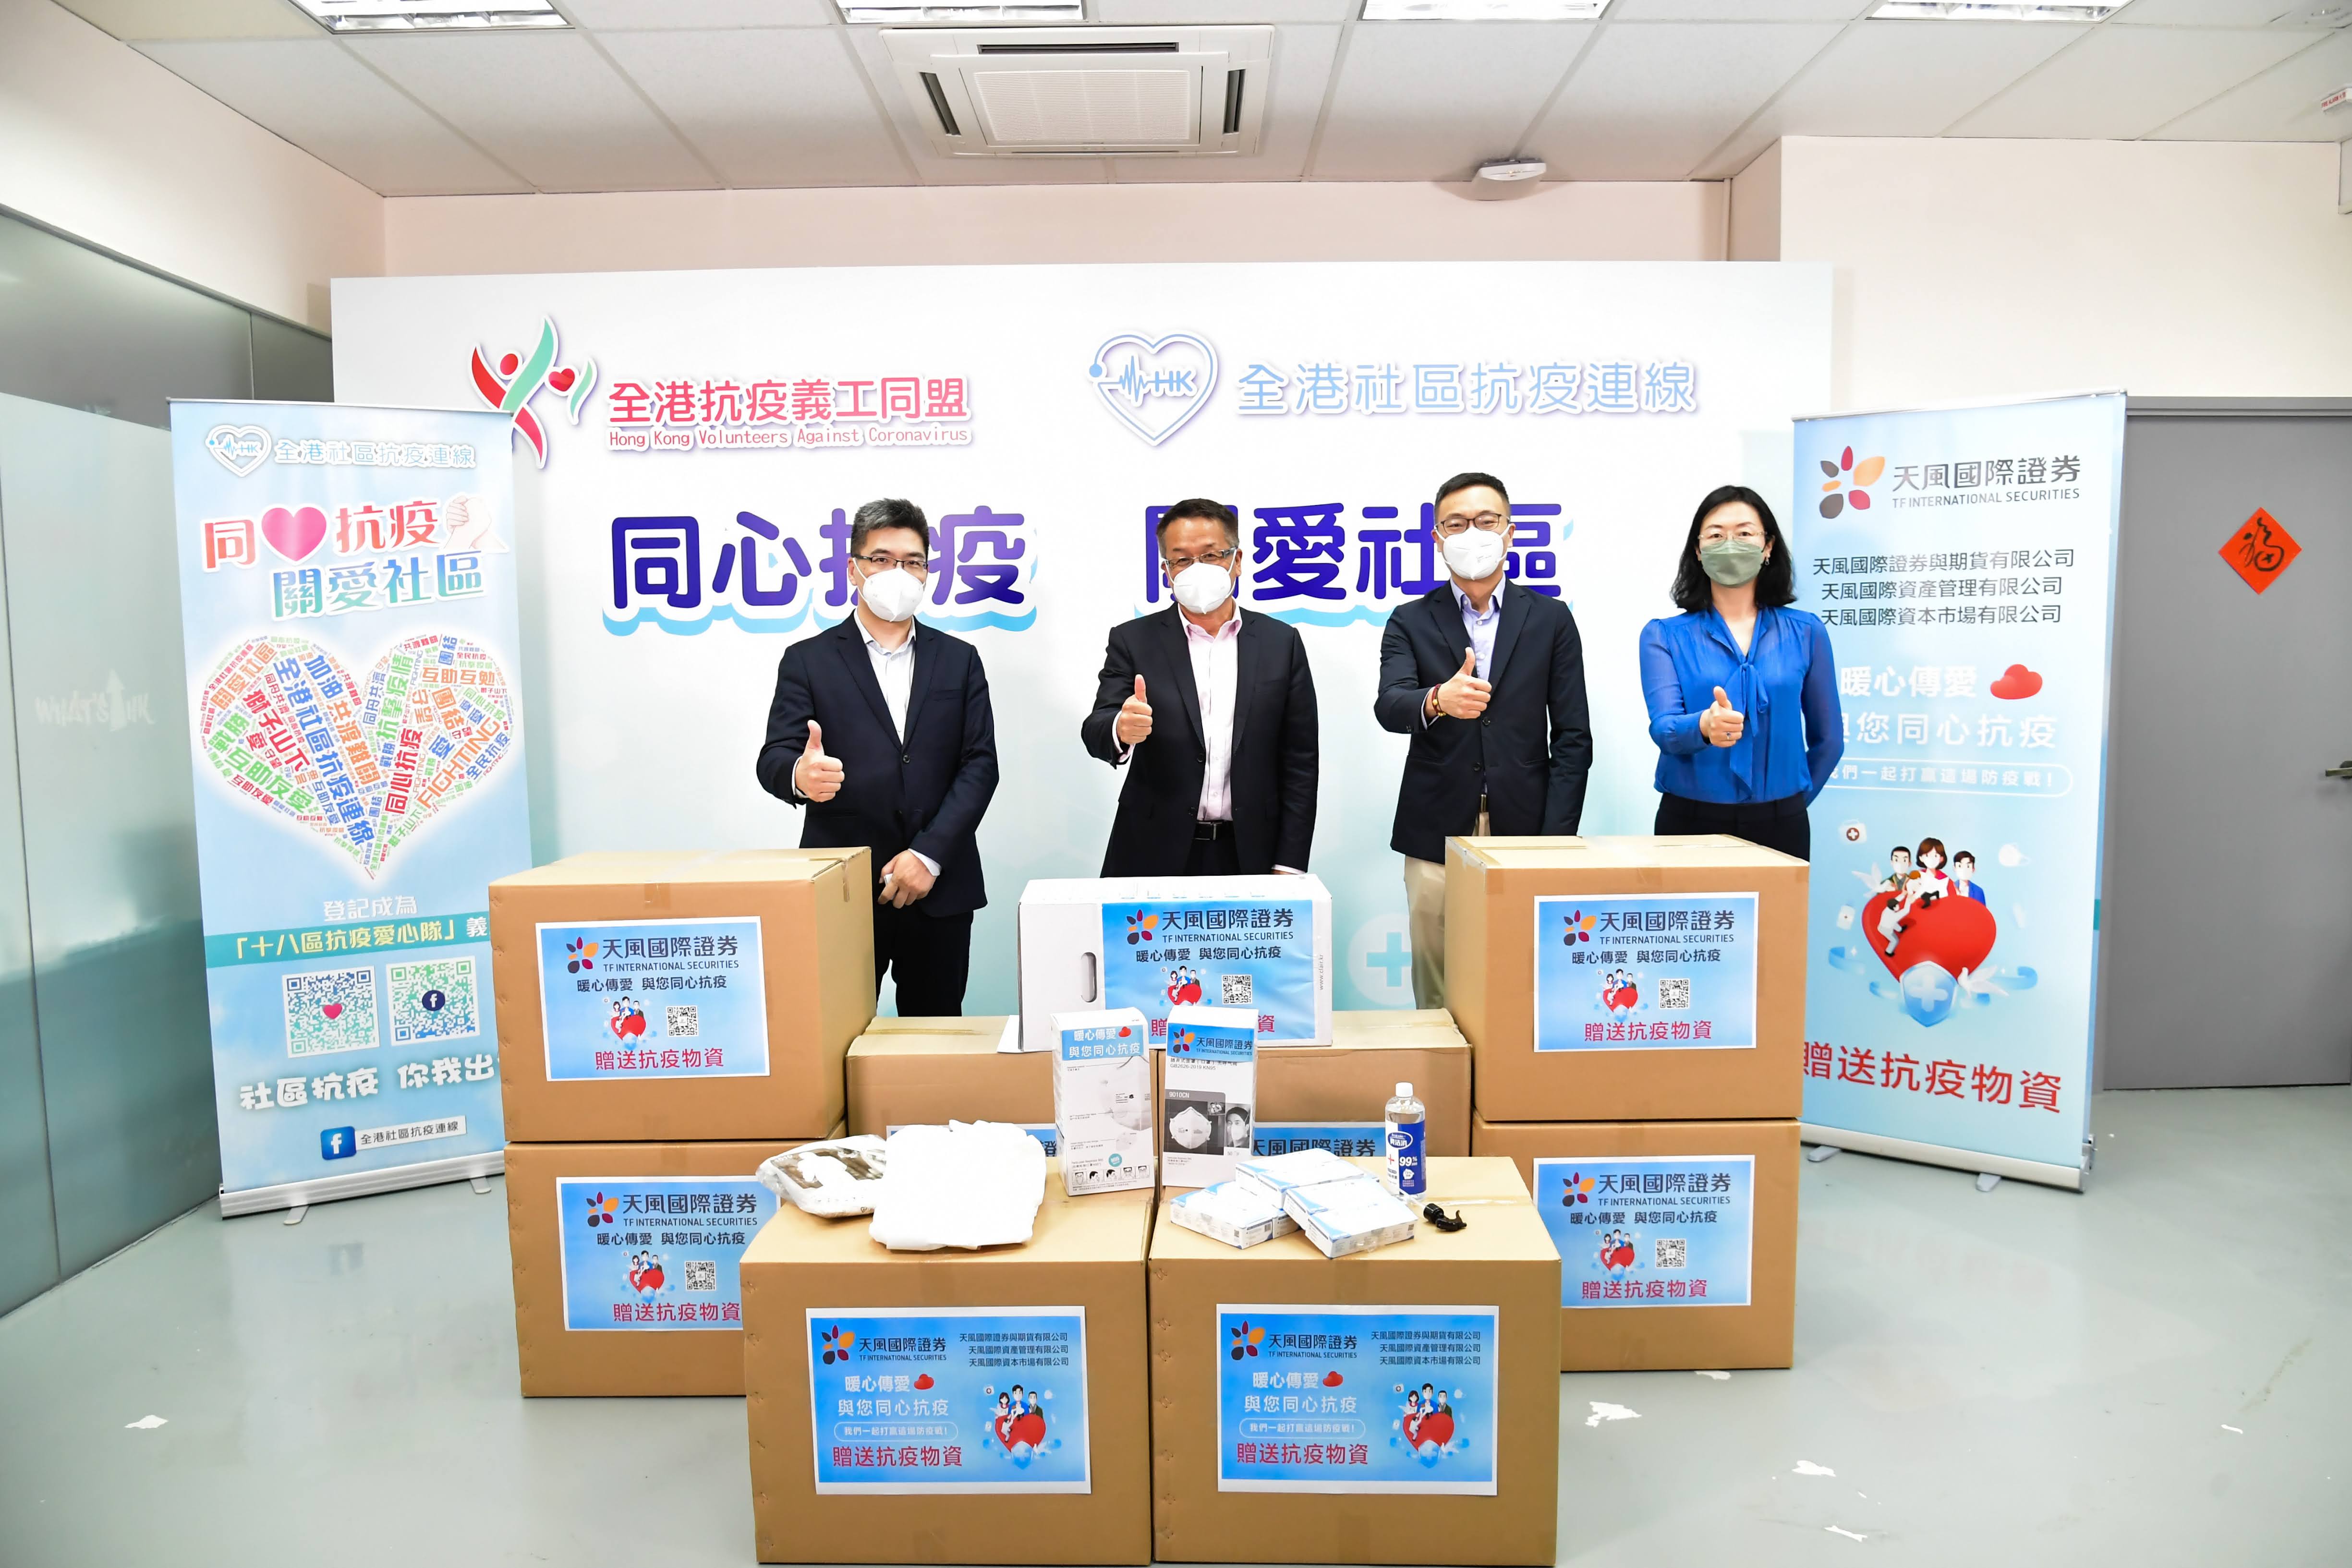 From left to right: Mr. HSU Hoi Shan, Secretary General of the Hong Kong Community Anti-Coronavirus Link (